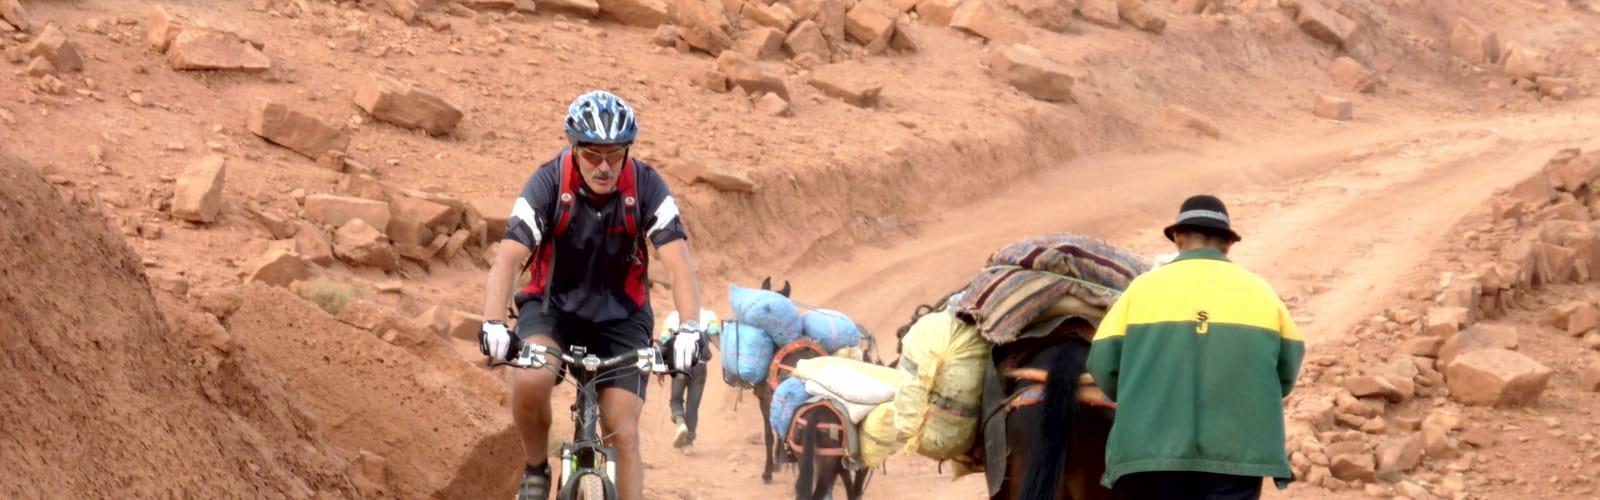 VTT Maroc piste dans le desert d'Ait Youl